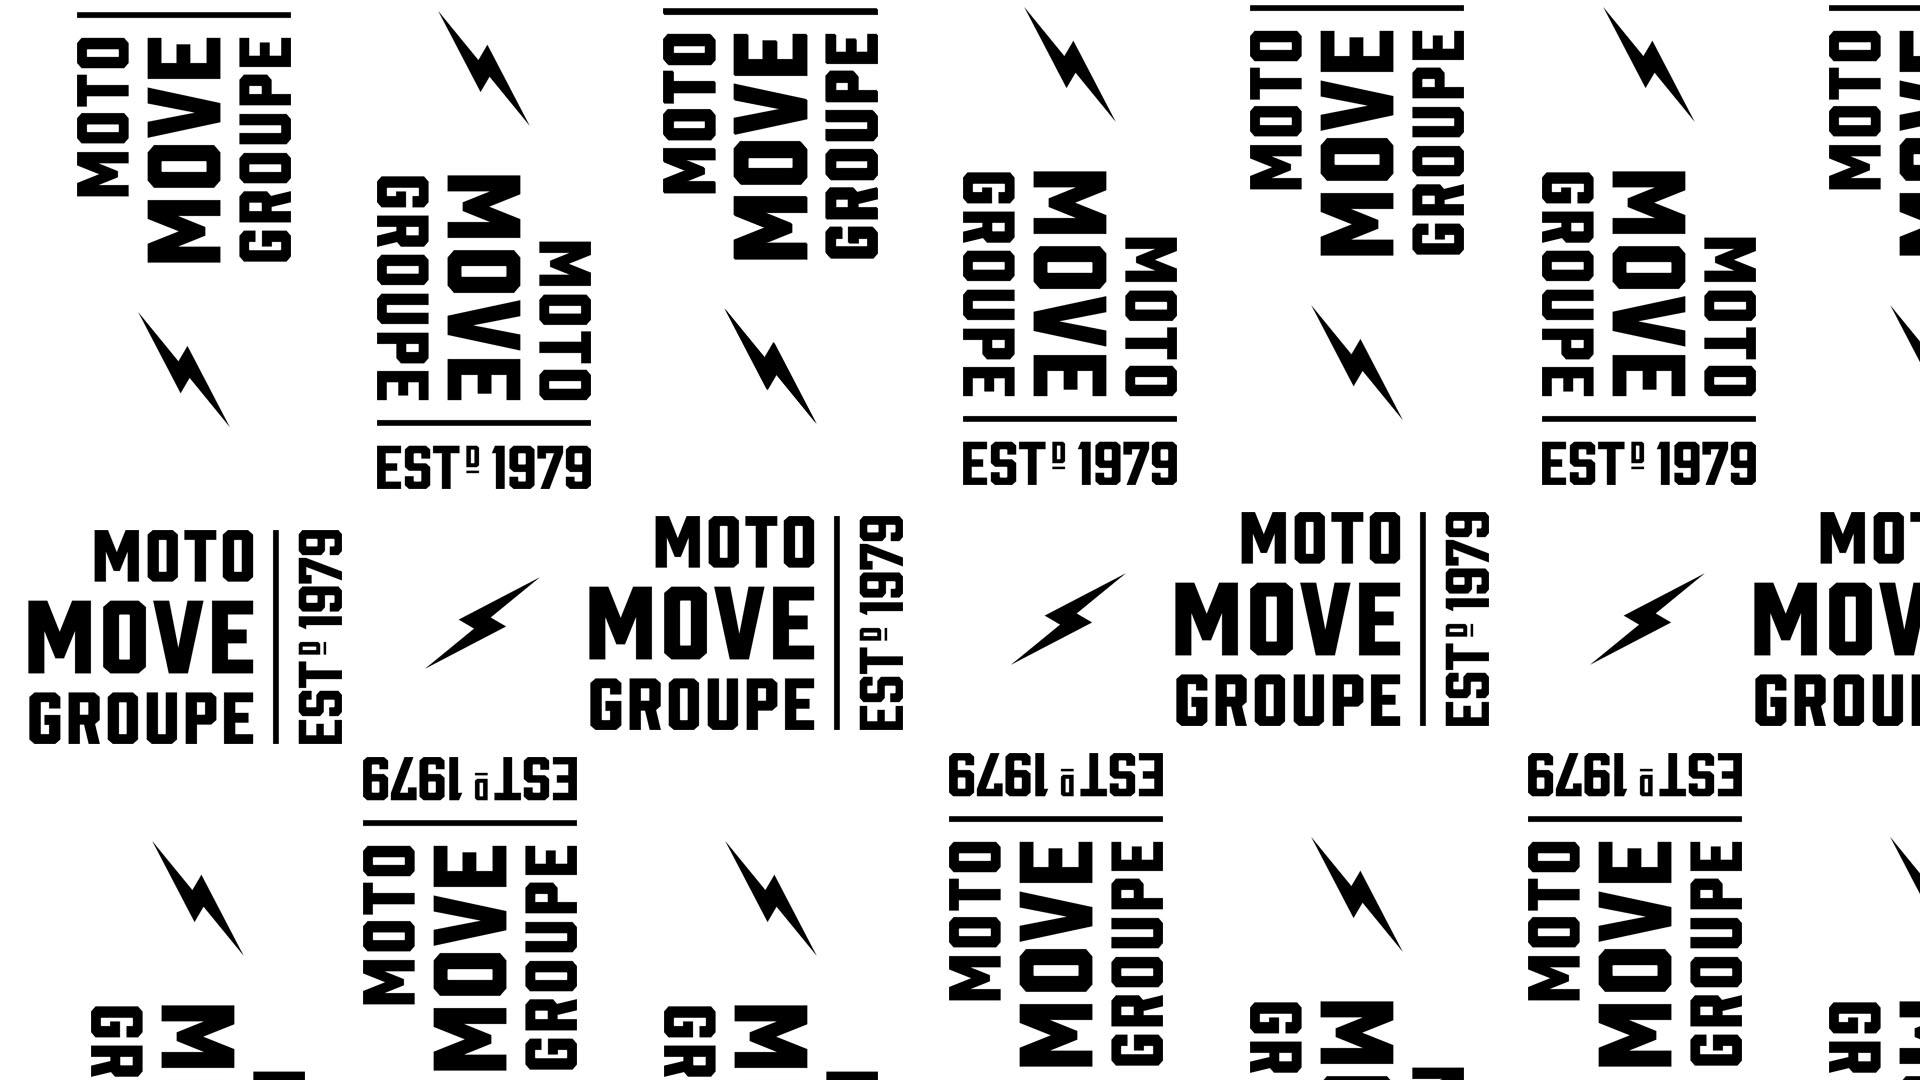 MOTO MOVE GROUPE SINCE 1979